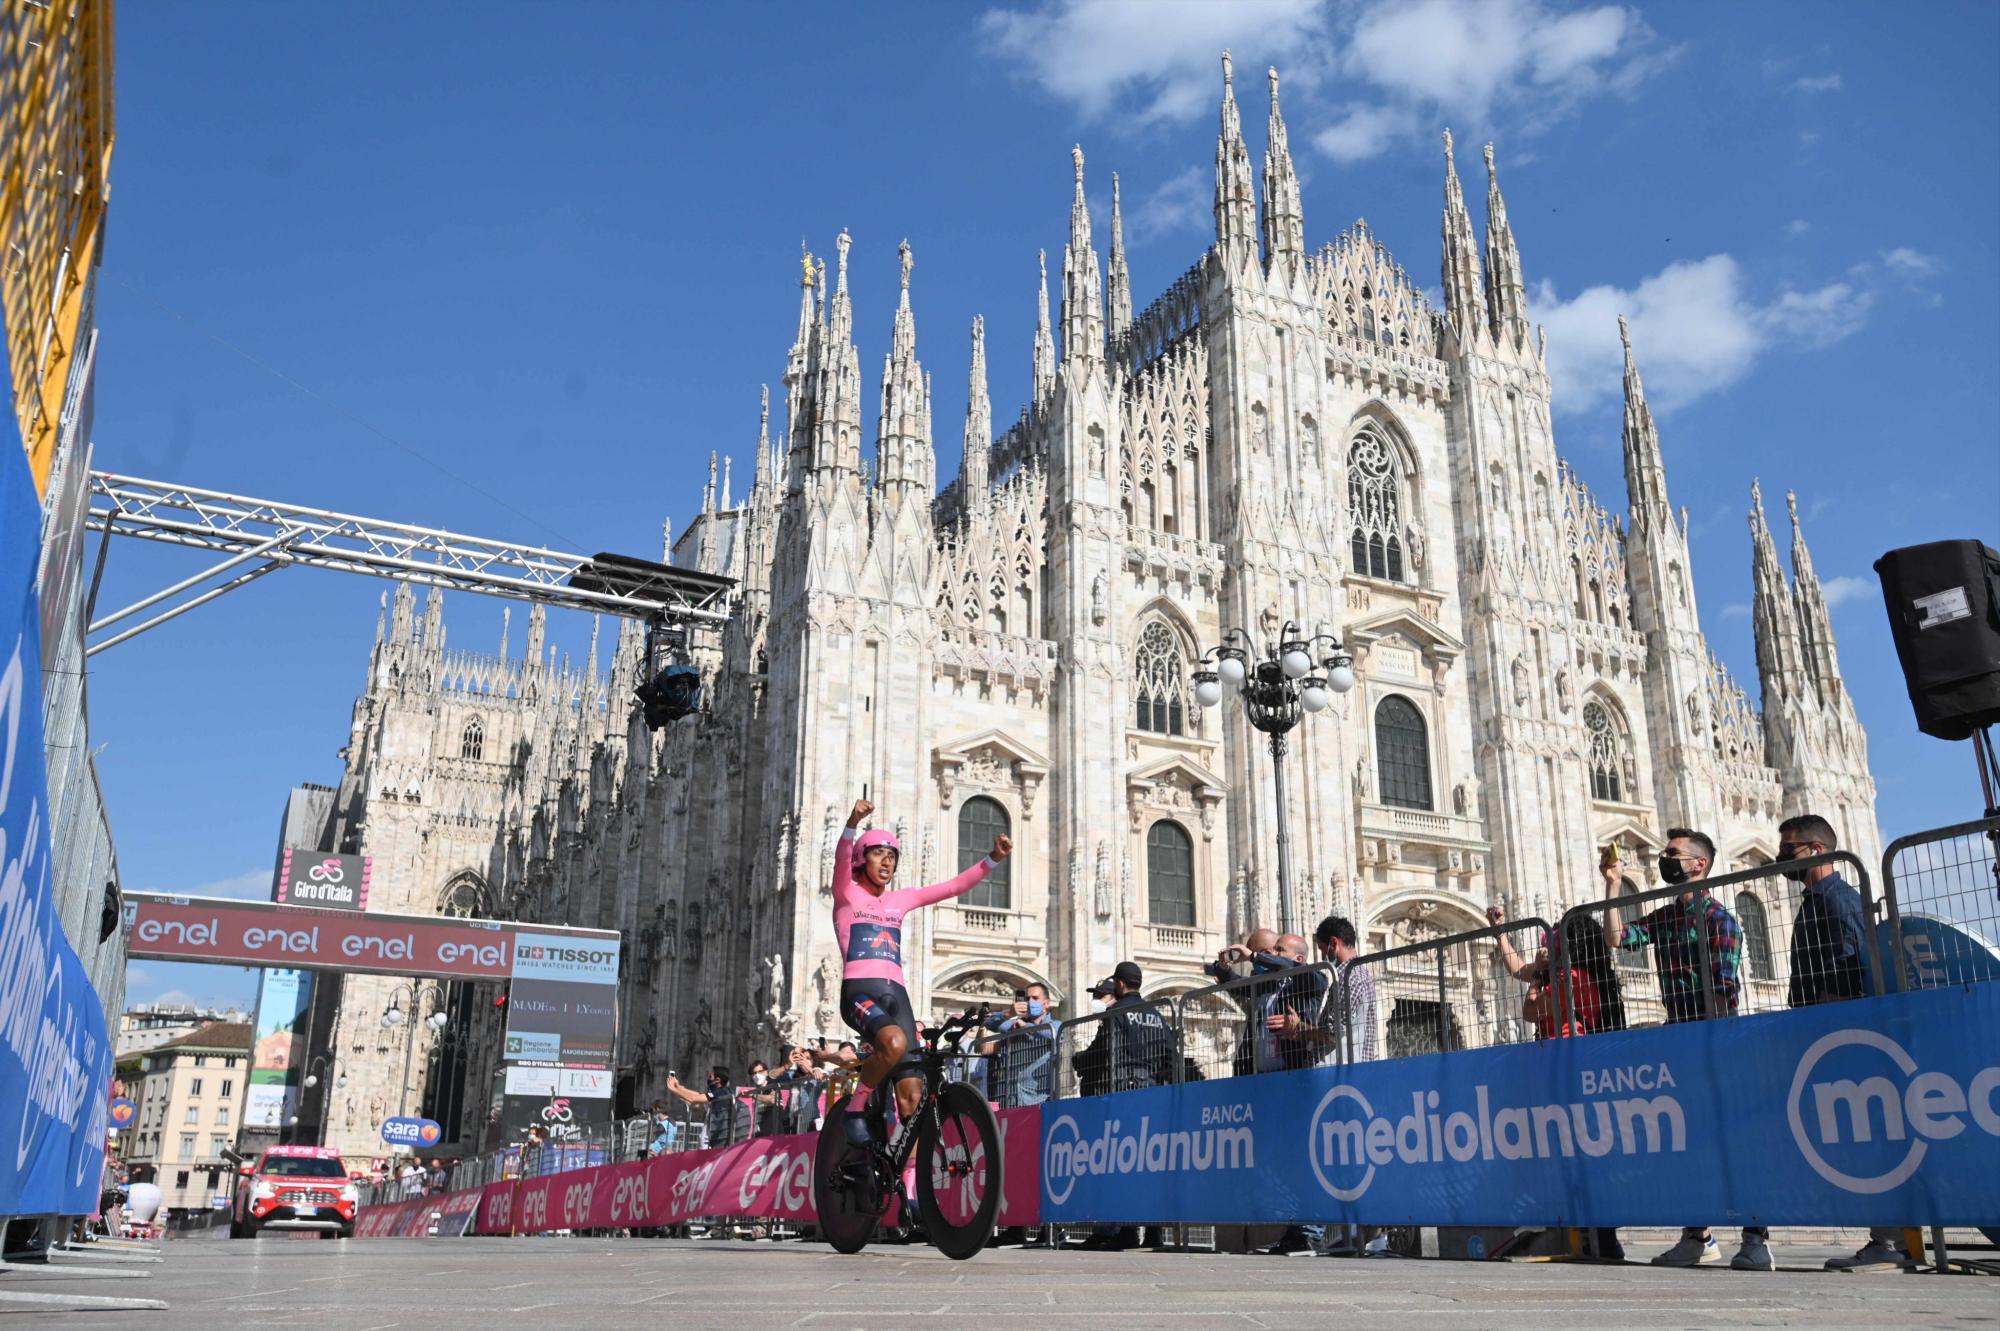 $!Colombiano Egan Bernal triunfa en el Giro d’Italia 2021